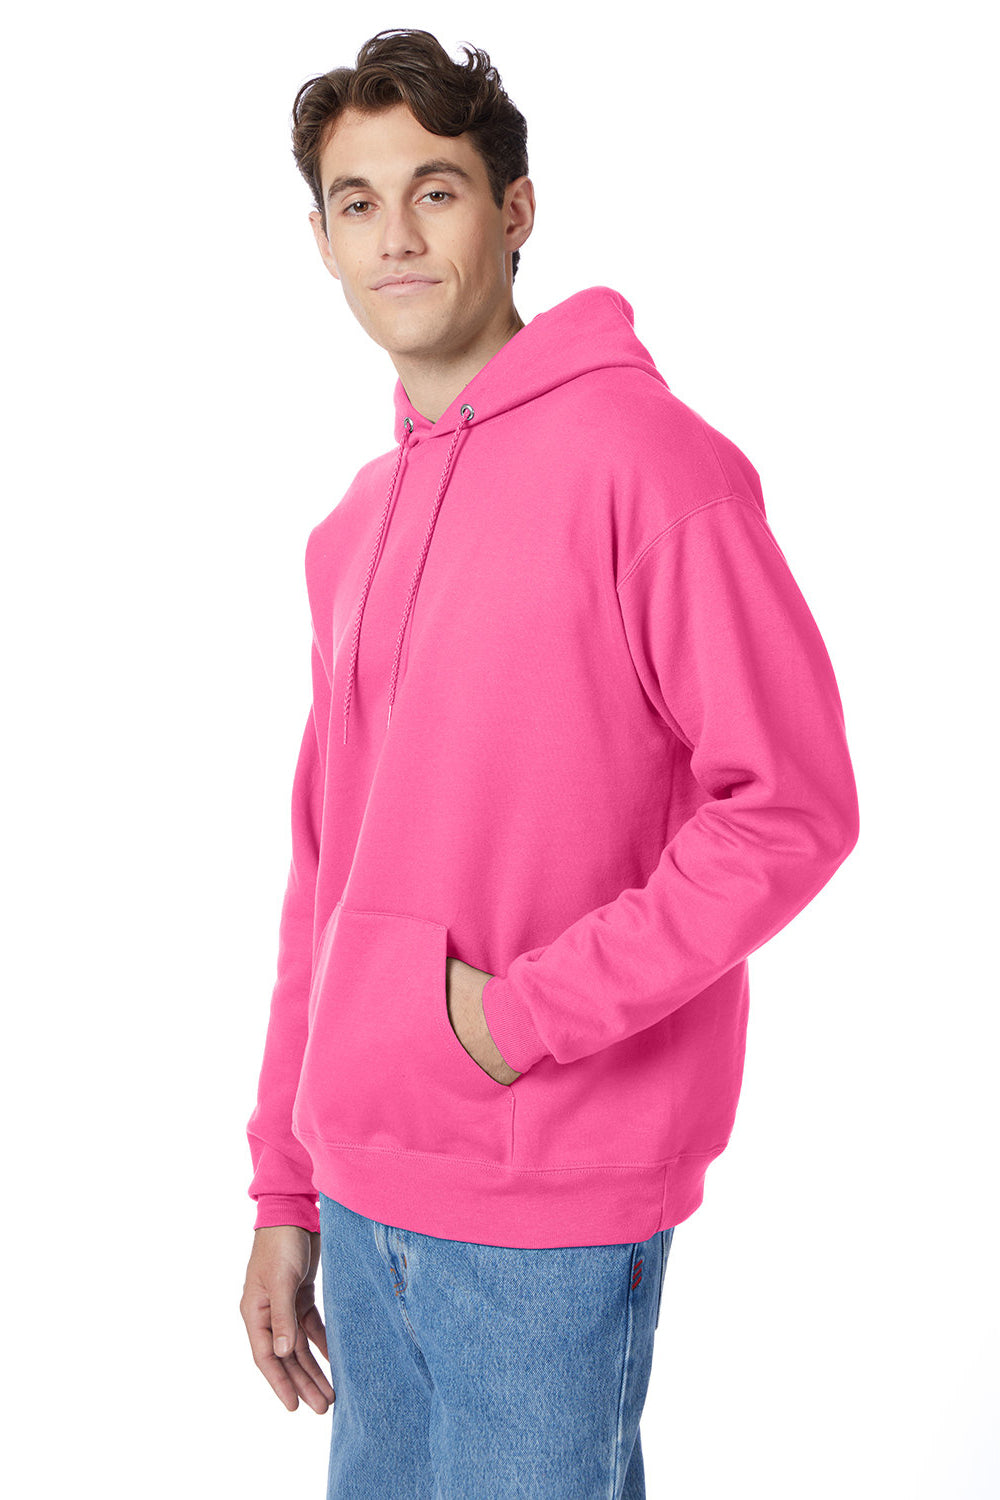 Hanes P170 Mens EcoSmart Print Pro XP Hooded Sweatshirt Hoodie Safety Pink 3Q